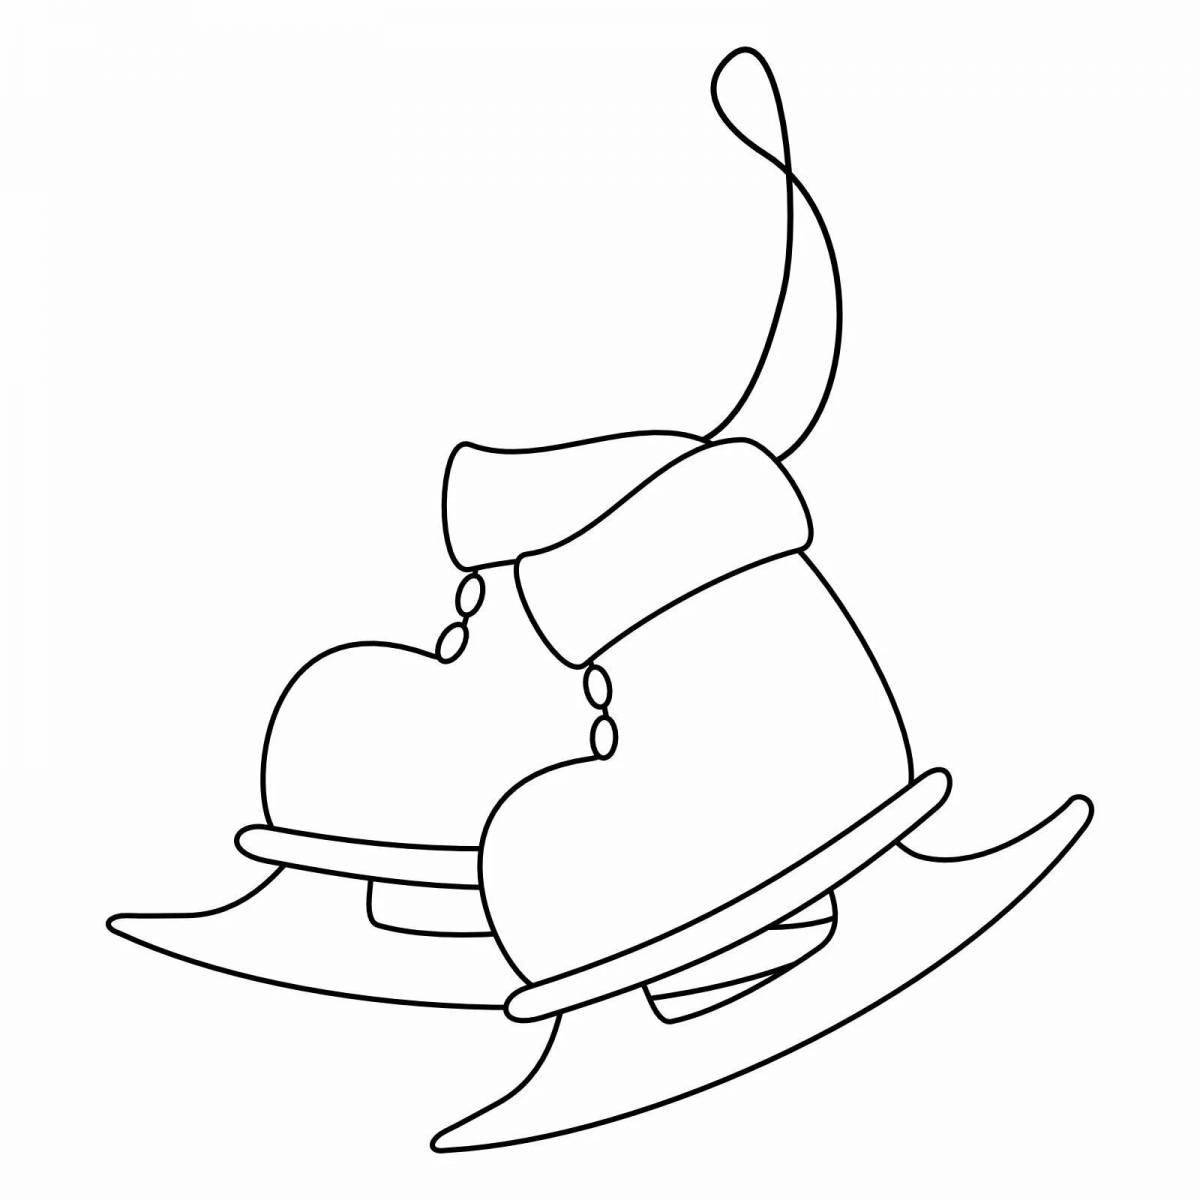 Coloring radiant skis skates sled